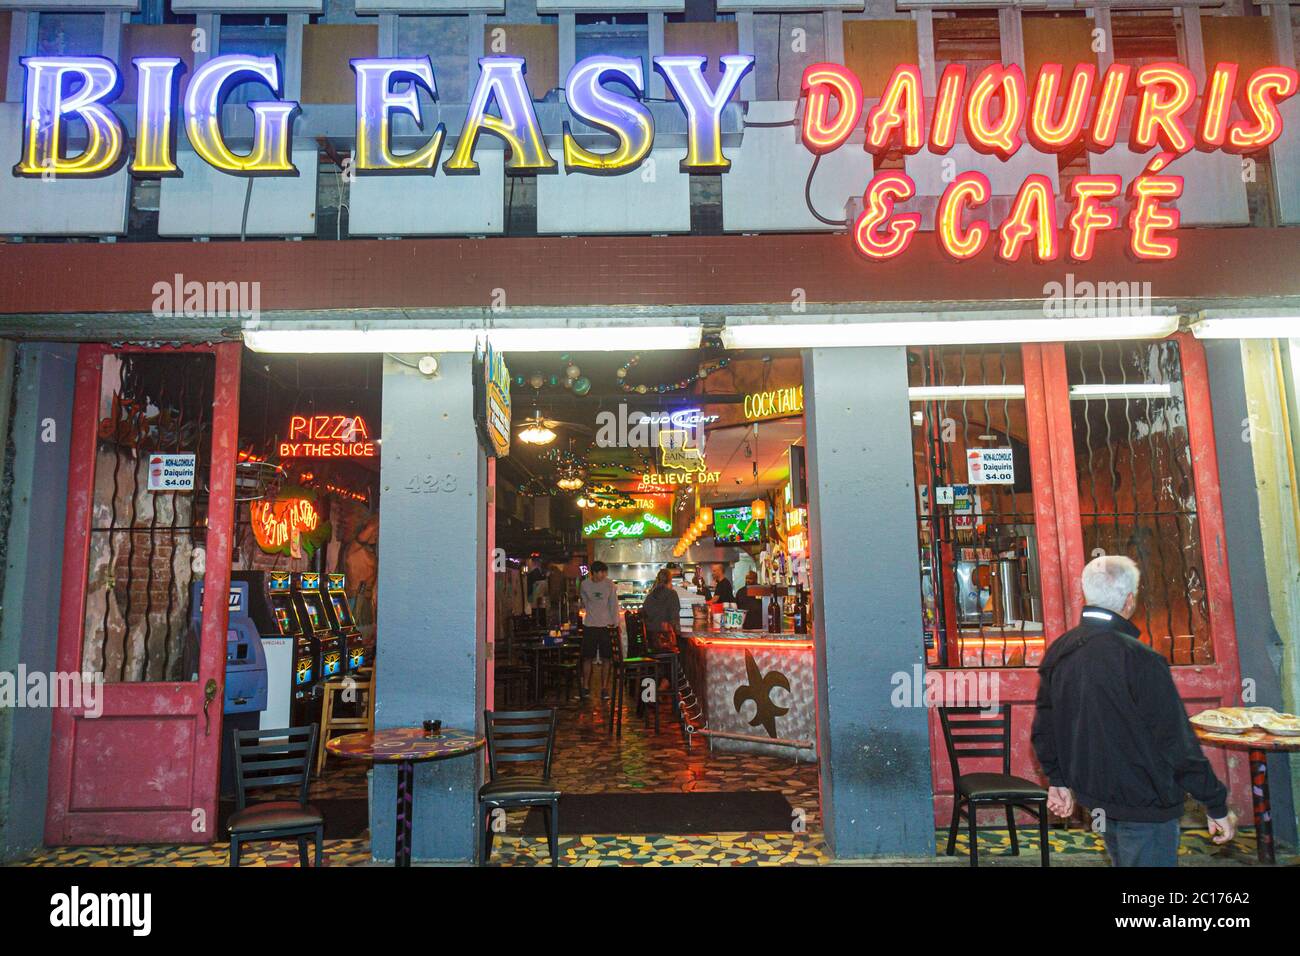 New Orleans Louisiana, Canal Street, centro, Big Easy Dairies & Cafe, bar lounge pub, ristorante ristoranti, ristoranti, ristoranti, caffè, esterno, f Foto Stock